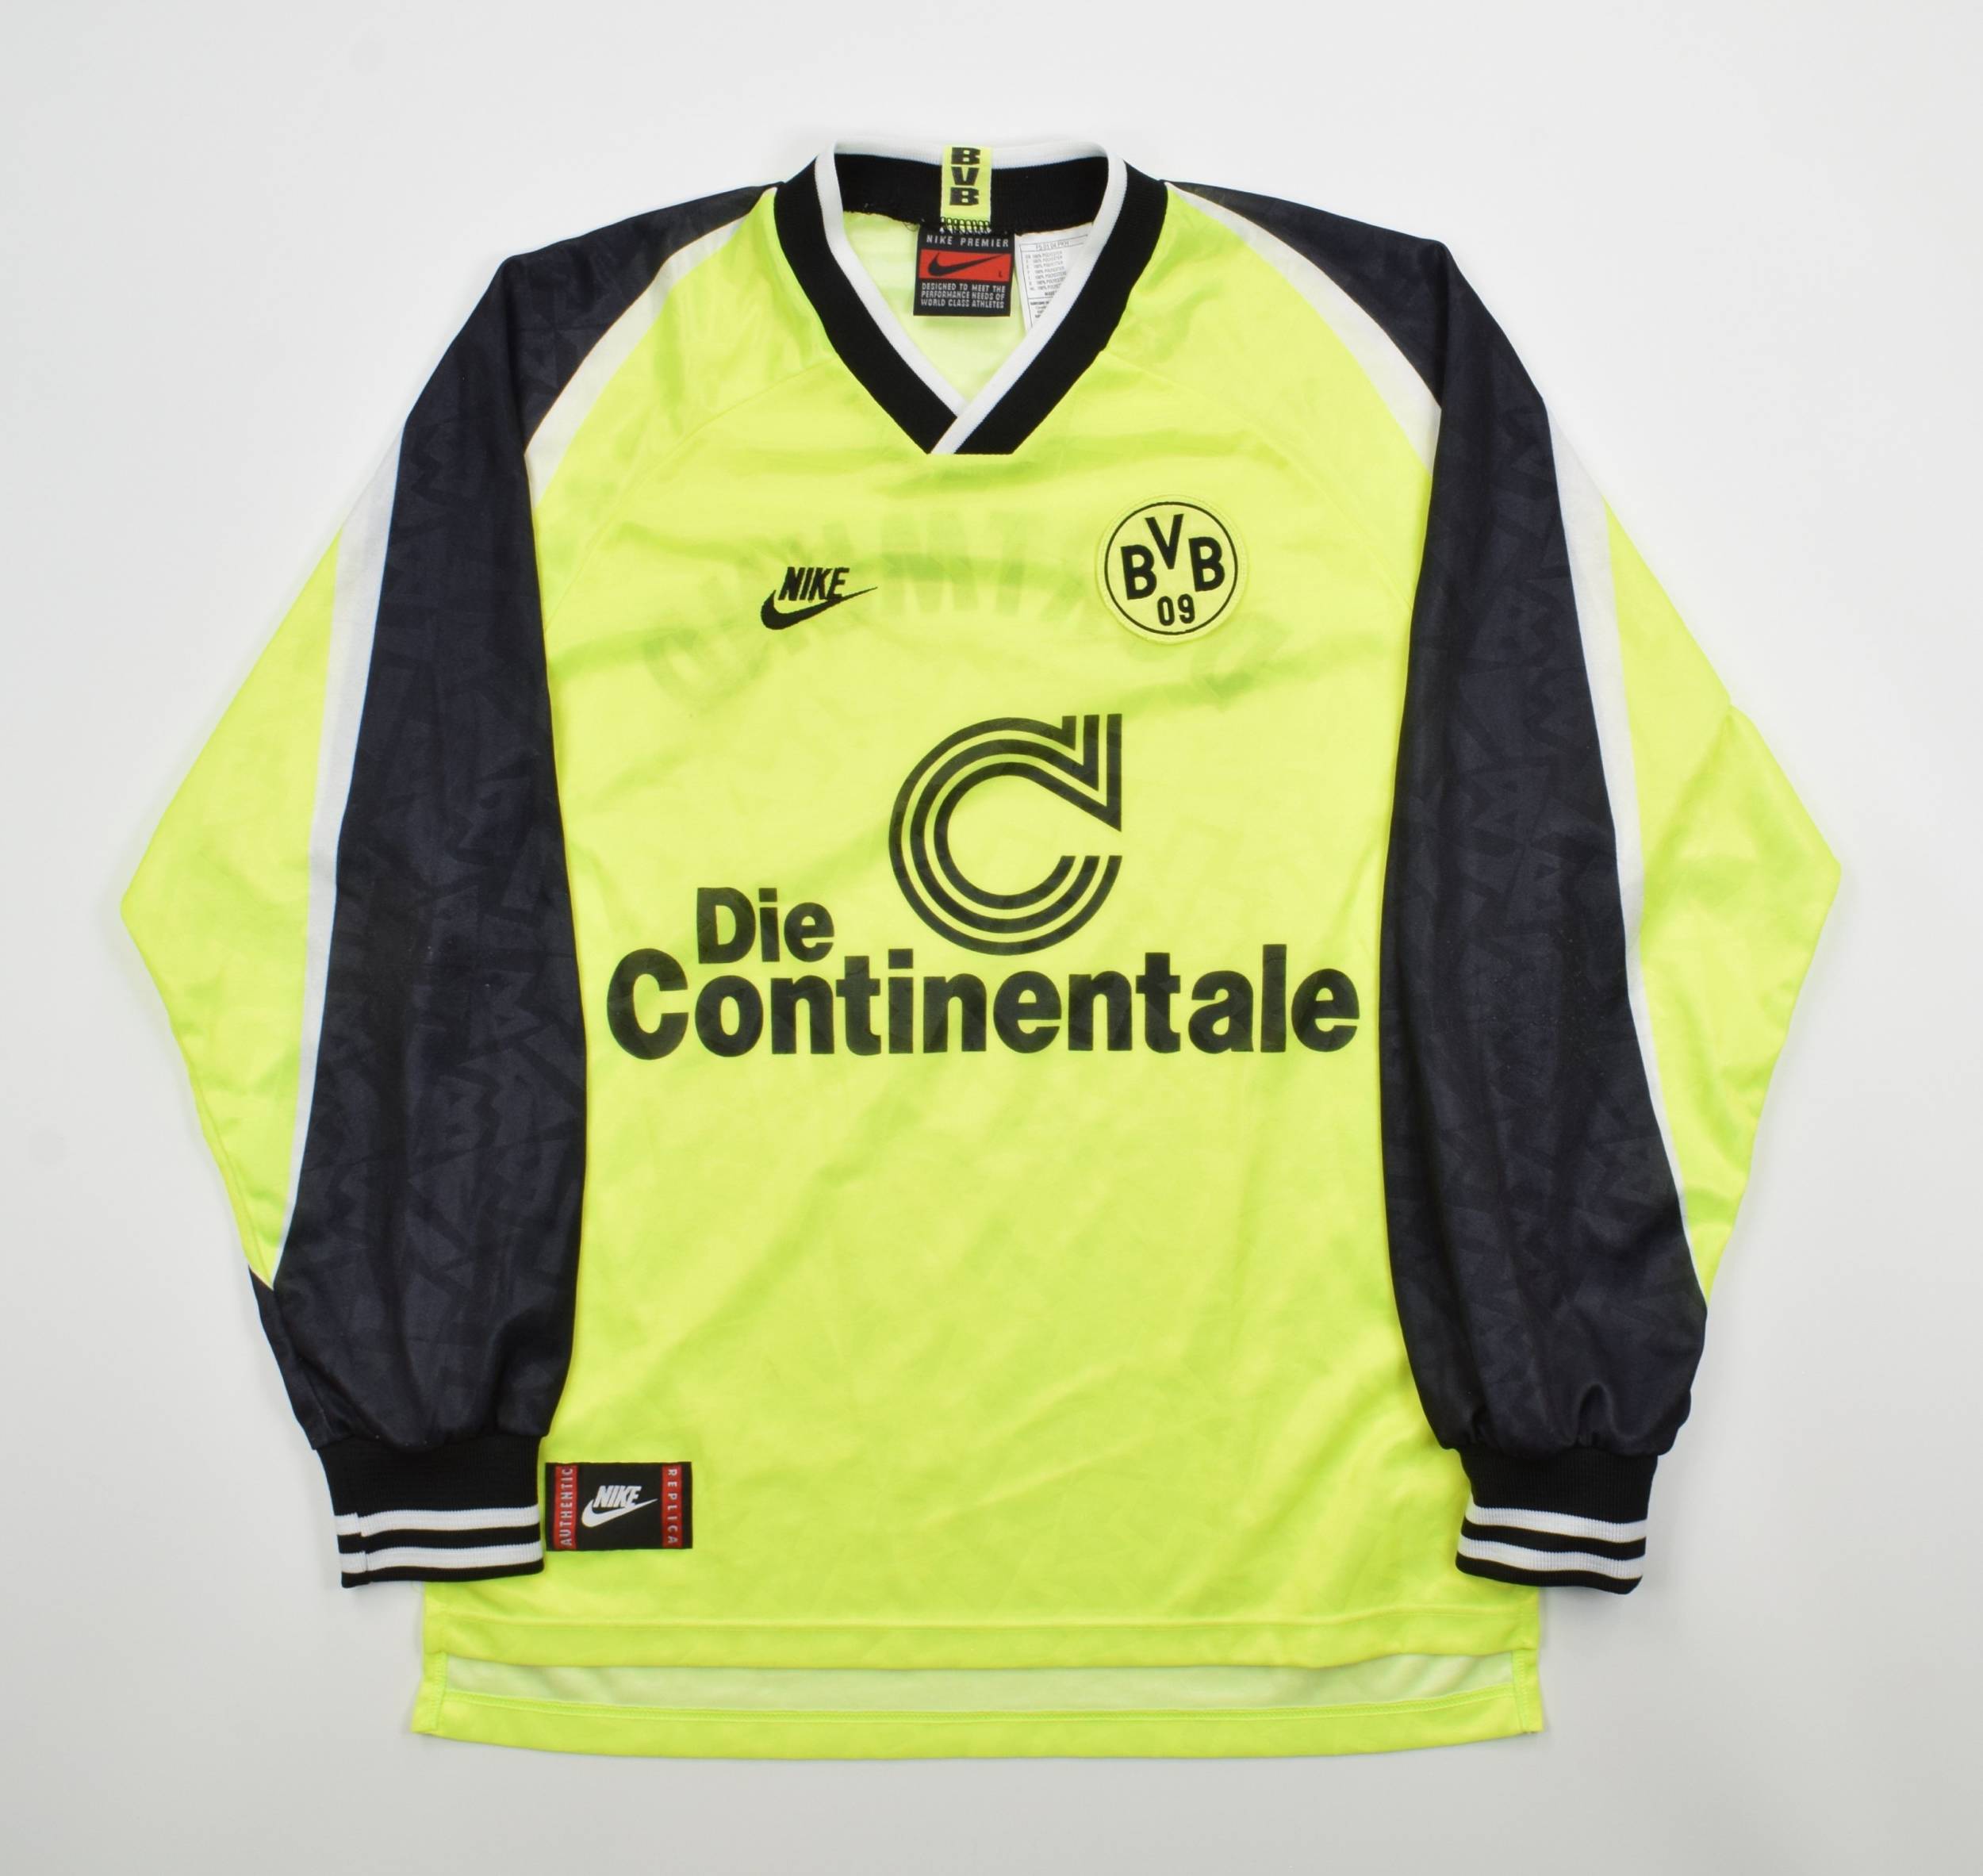 Retro Borussia Dortmund Home Jersey 1995/96 By Nike